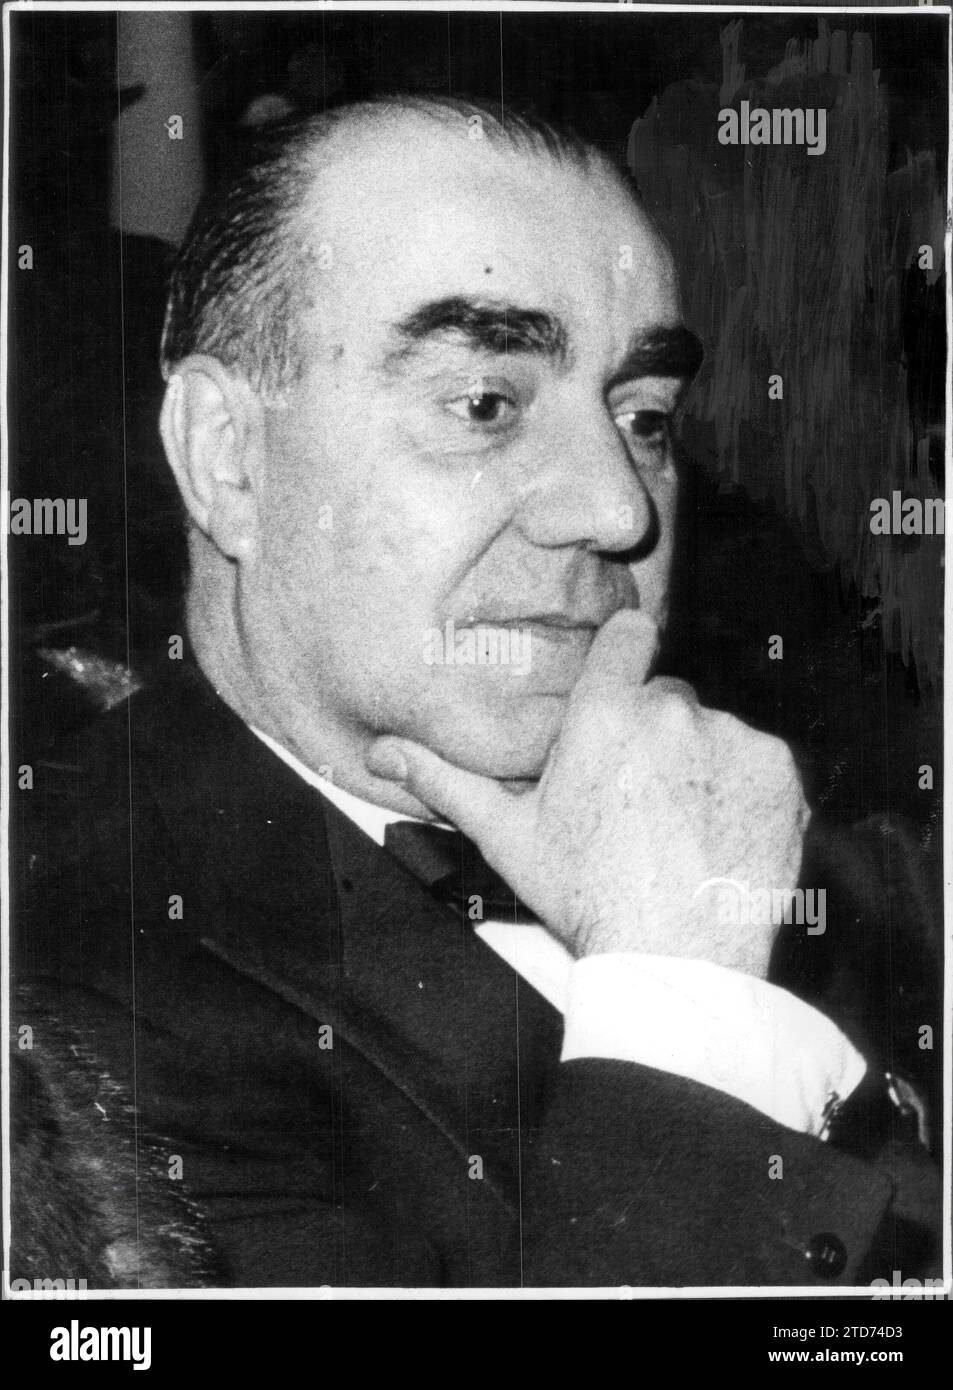 12/31/1966. In the image Don Luis Carrero Blanco. Credit: Album / Archivo ABC / Teodoro Naranjo Domínguez Stock Photo